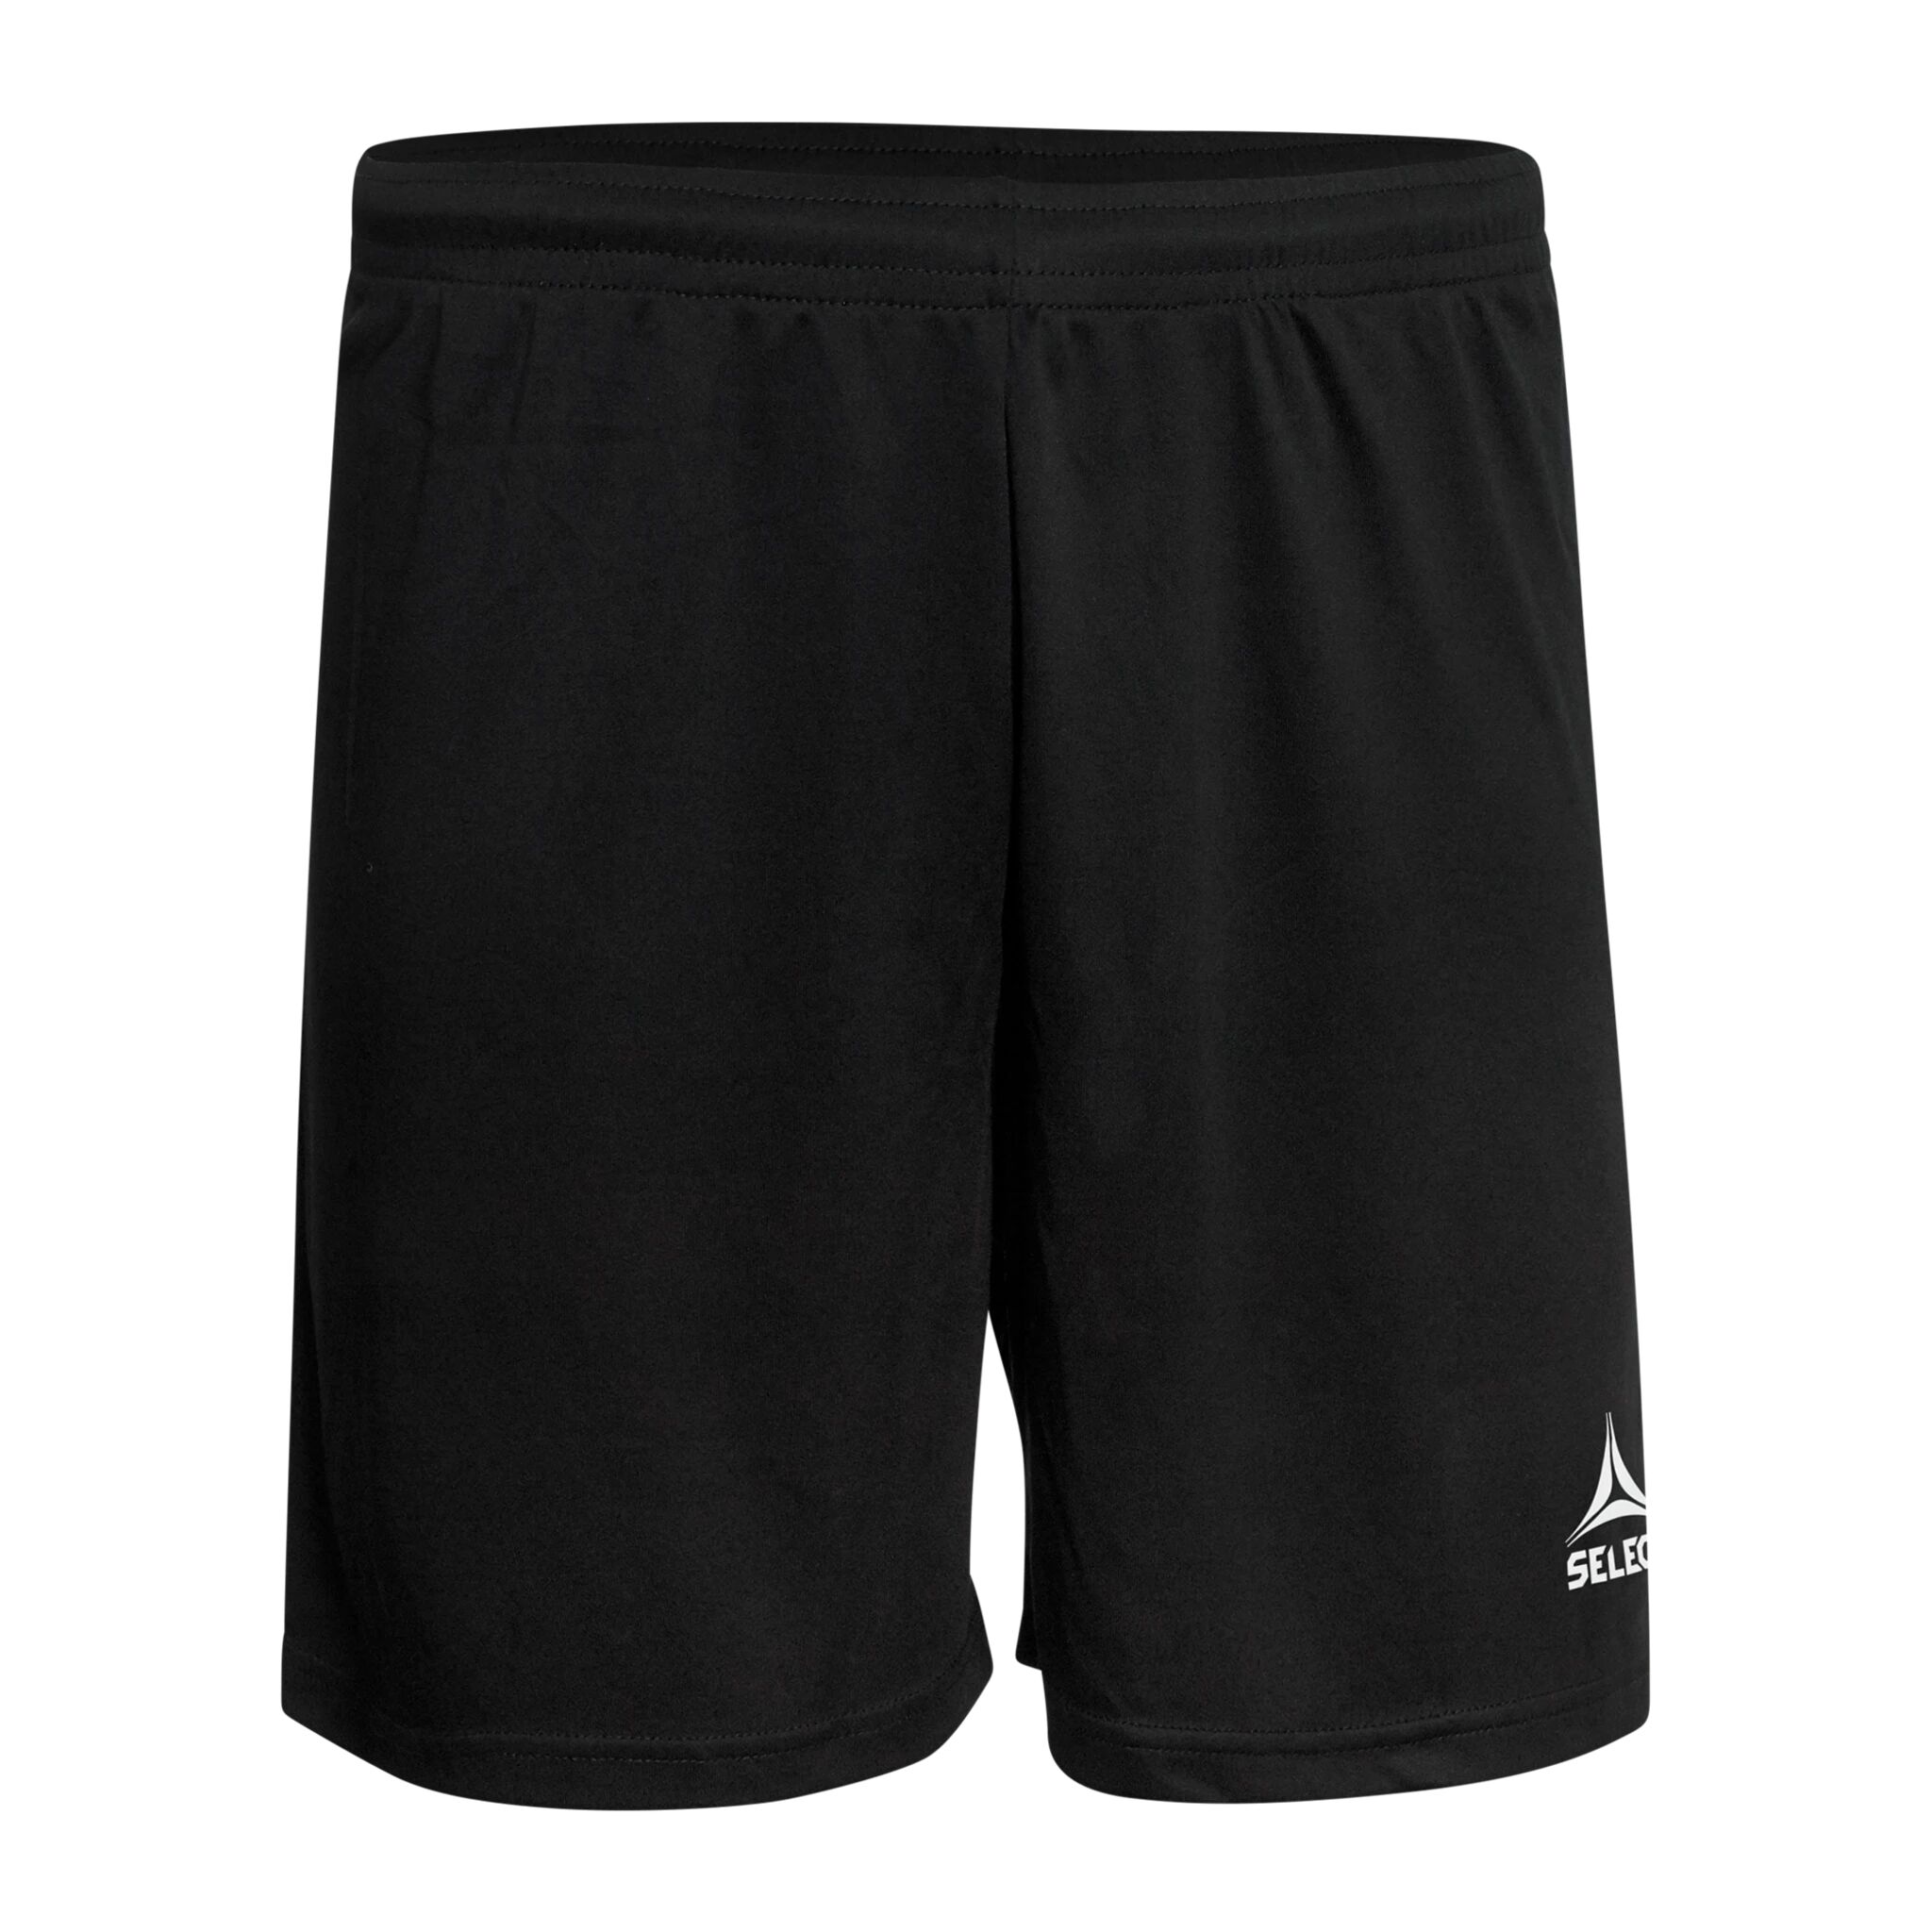 Select Player shorts Pisa, shorts senior XXL BLACK